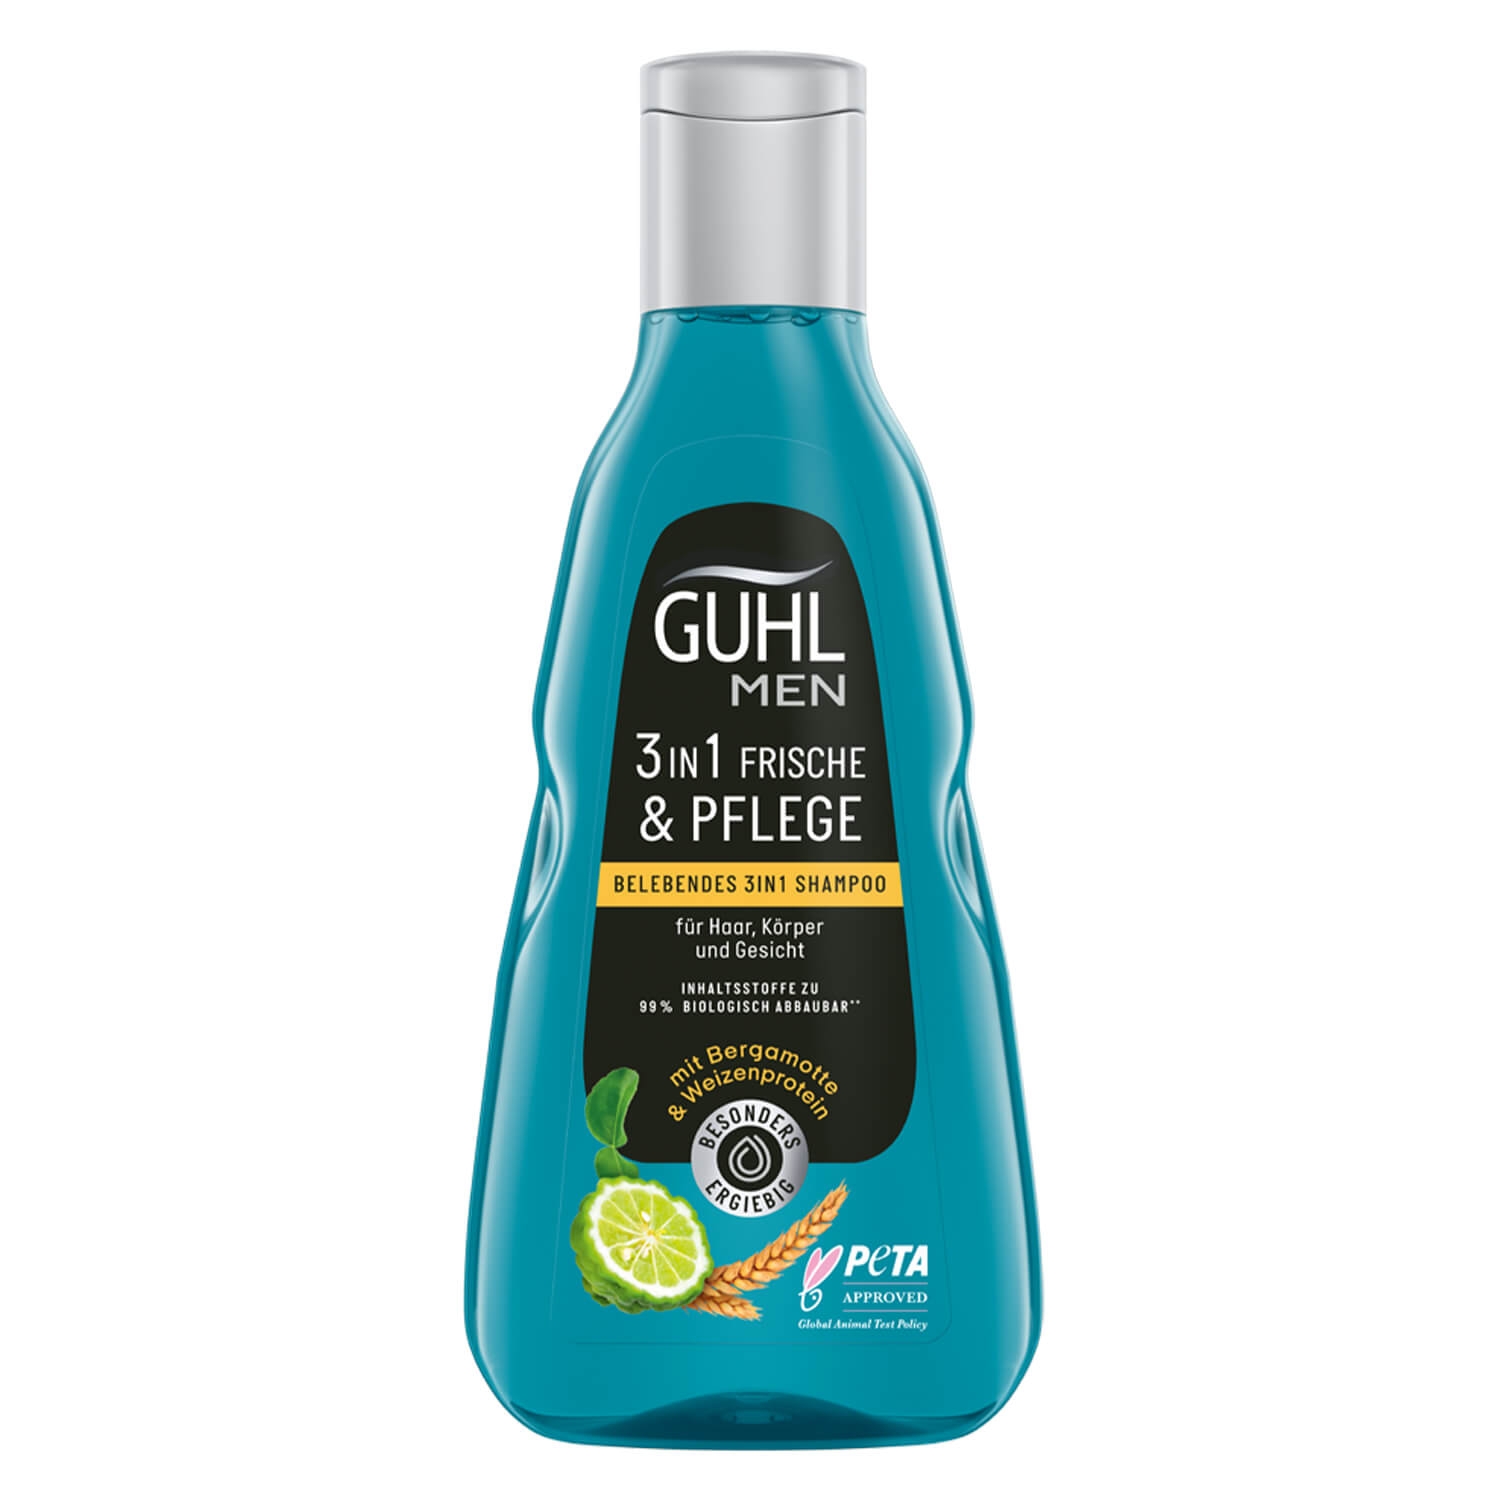 Product image from GUHL - MEN FRISCHE & PFLEGE Belebendes 3in1 Shampoo